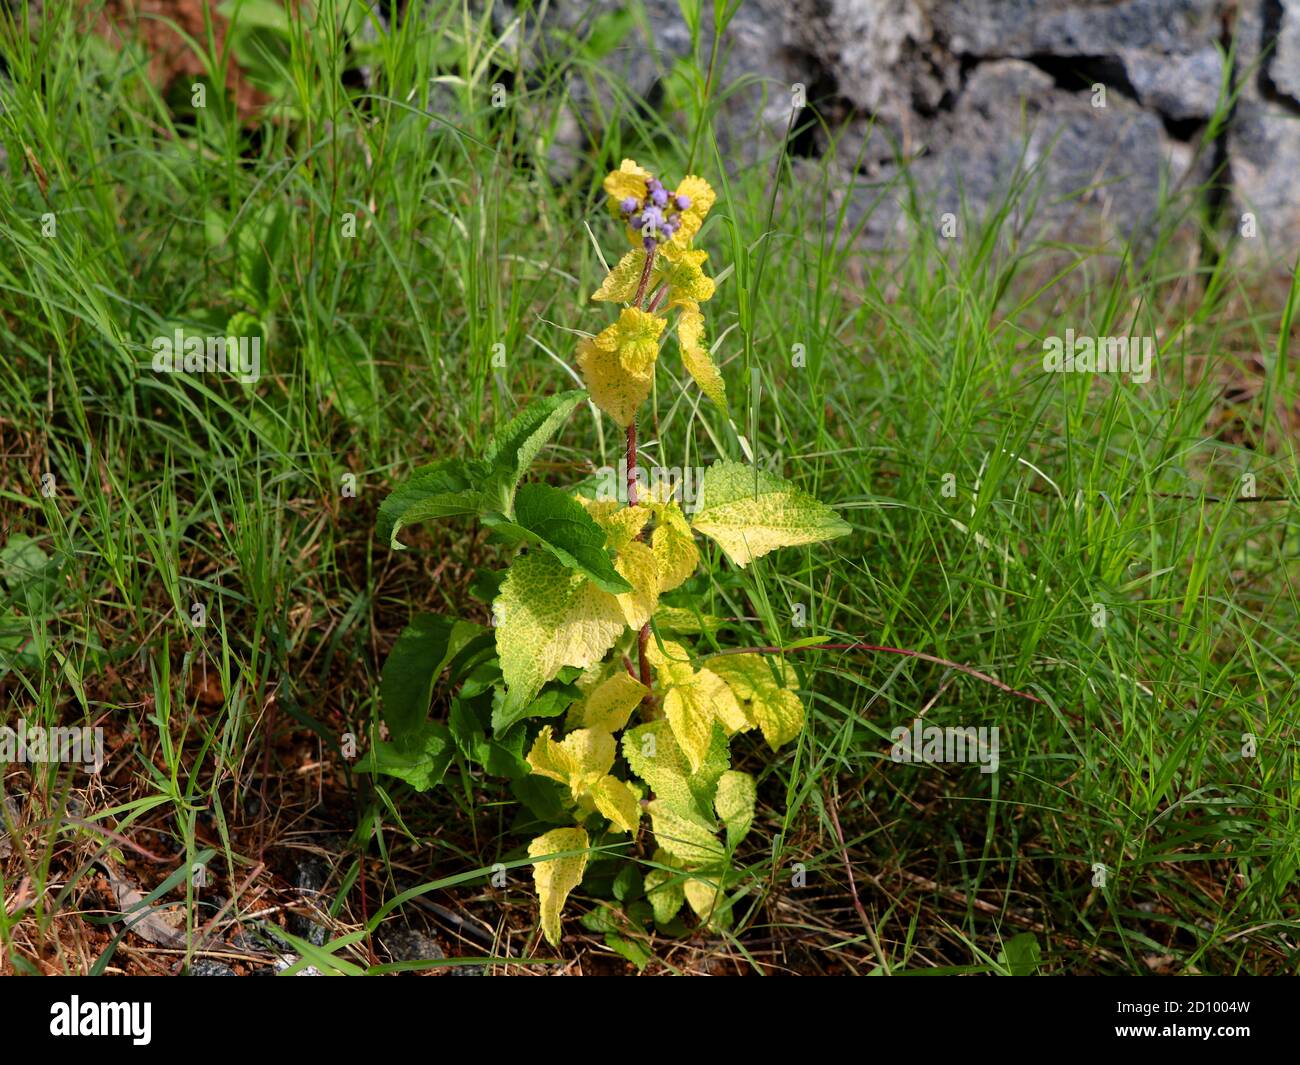 Erbacce di capra Billy o ricci (Ageratum conyzoides) in foglie verdi e gialle a causa di disturbi genetici, erba annuale Foto Stock